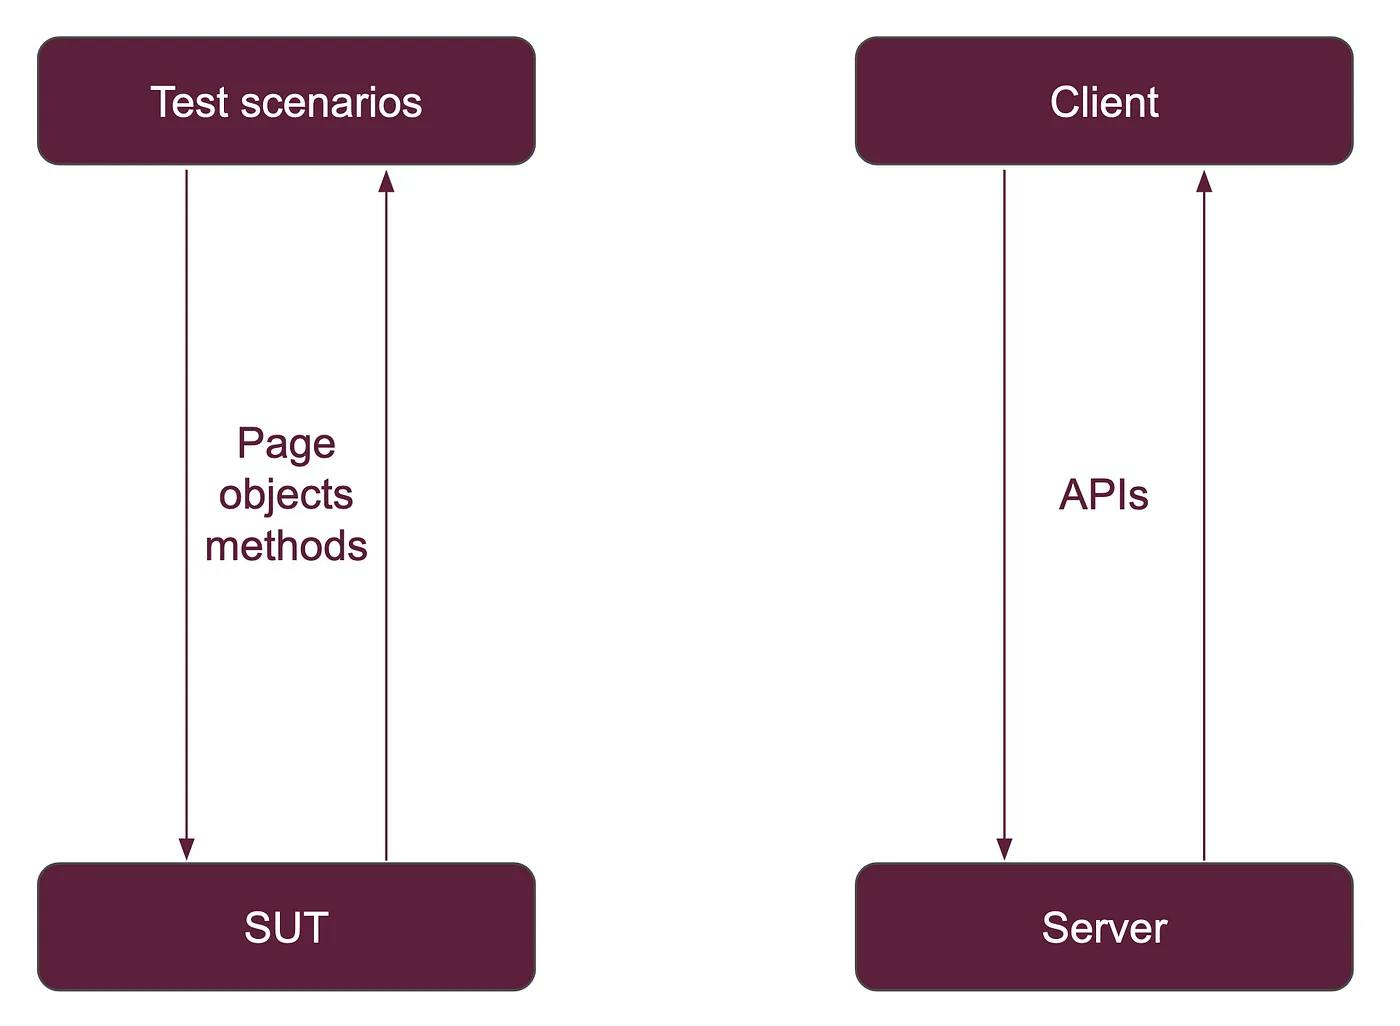 Page object methods like APIs